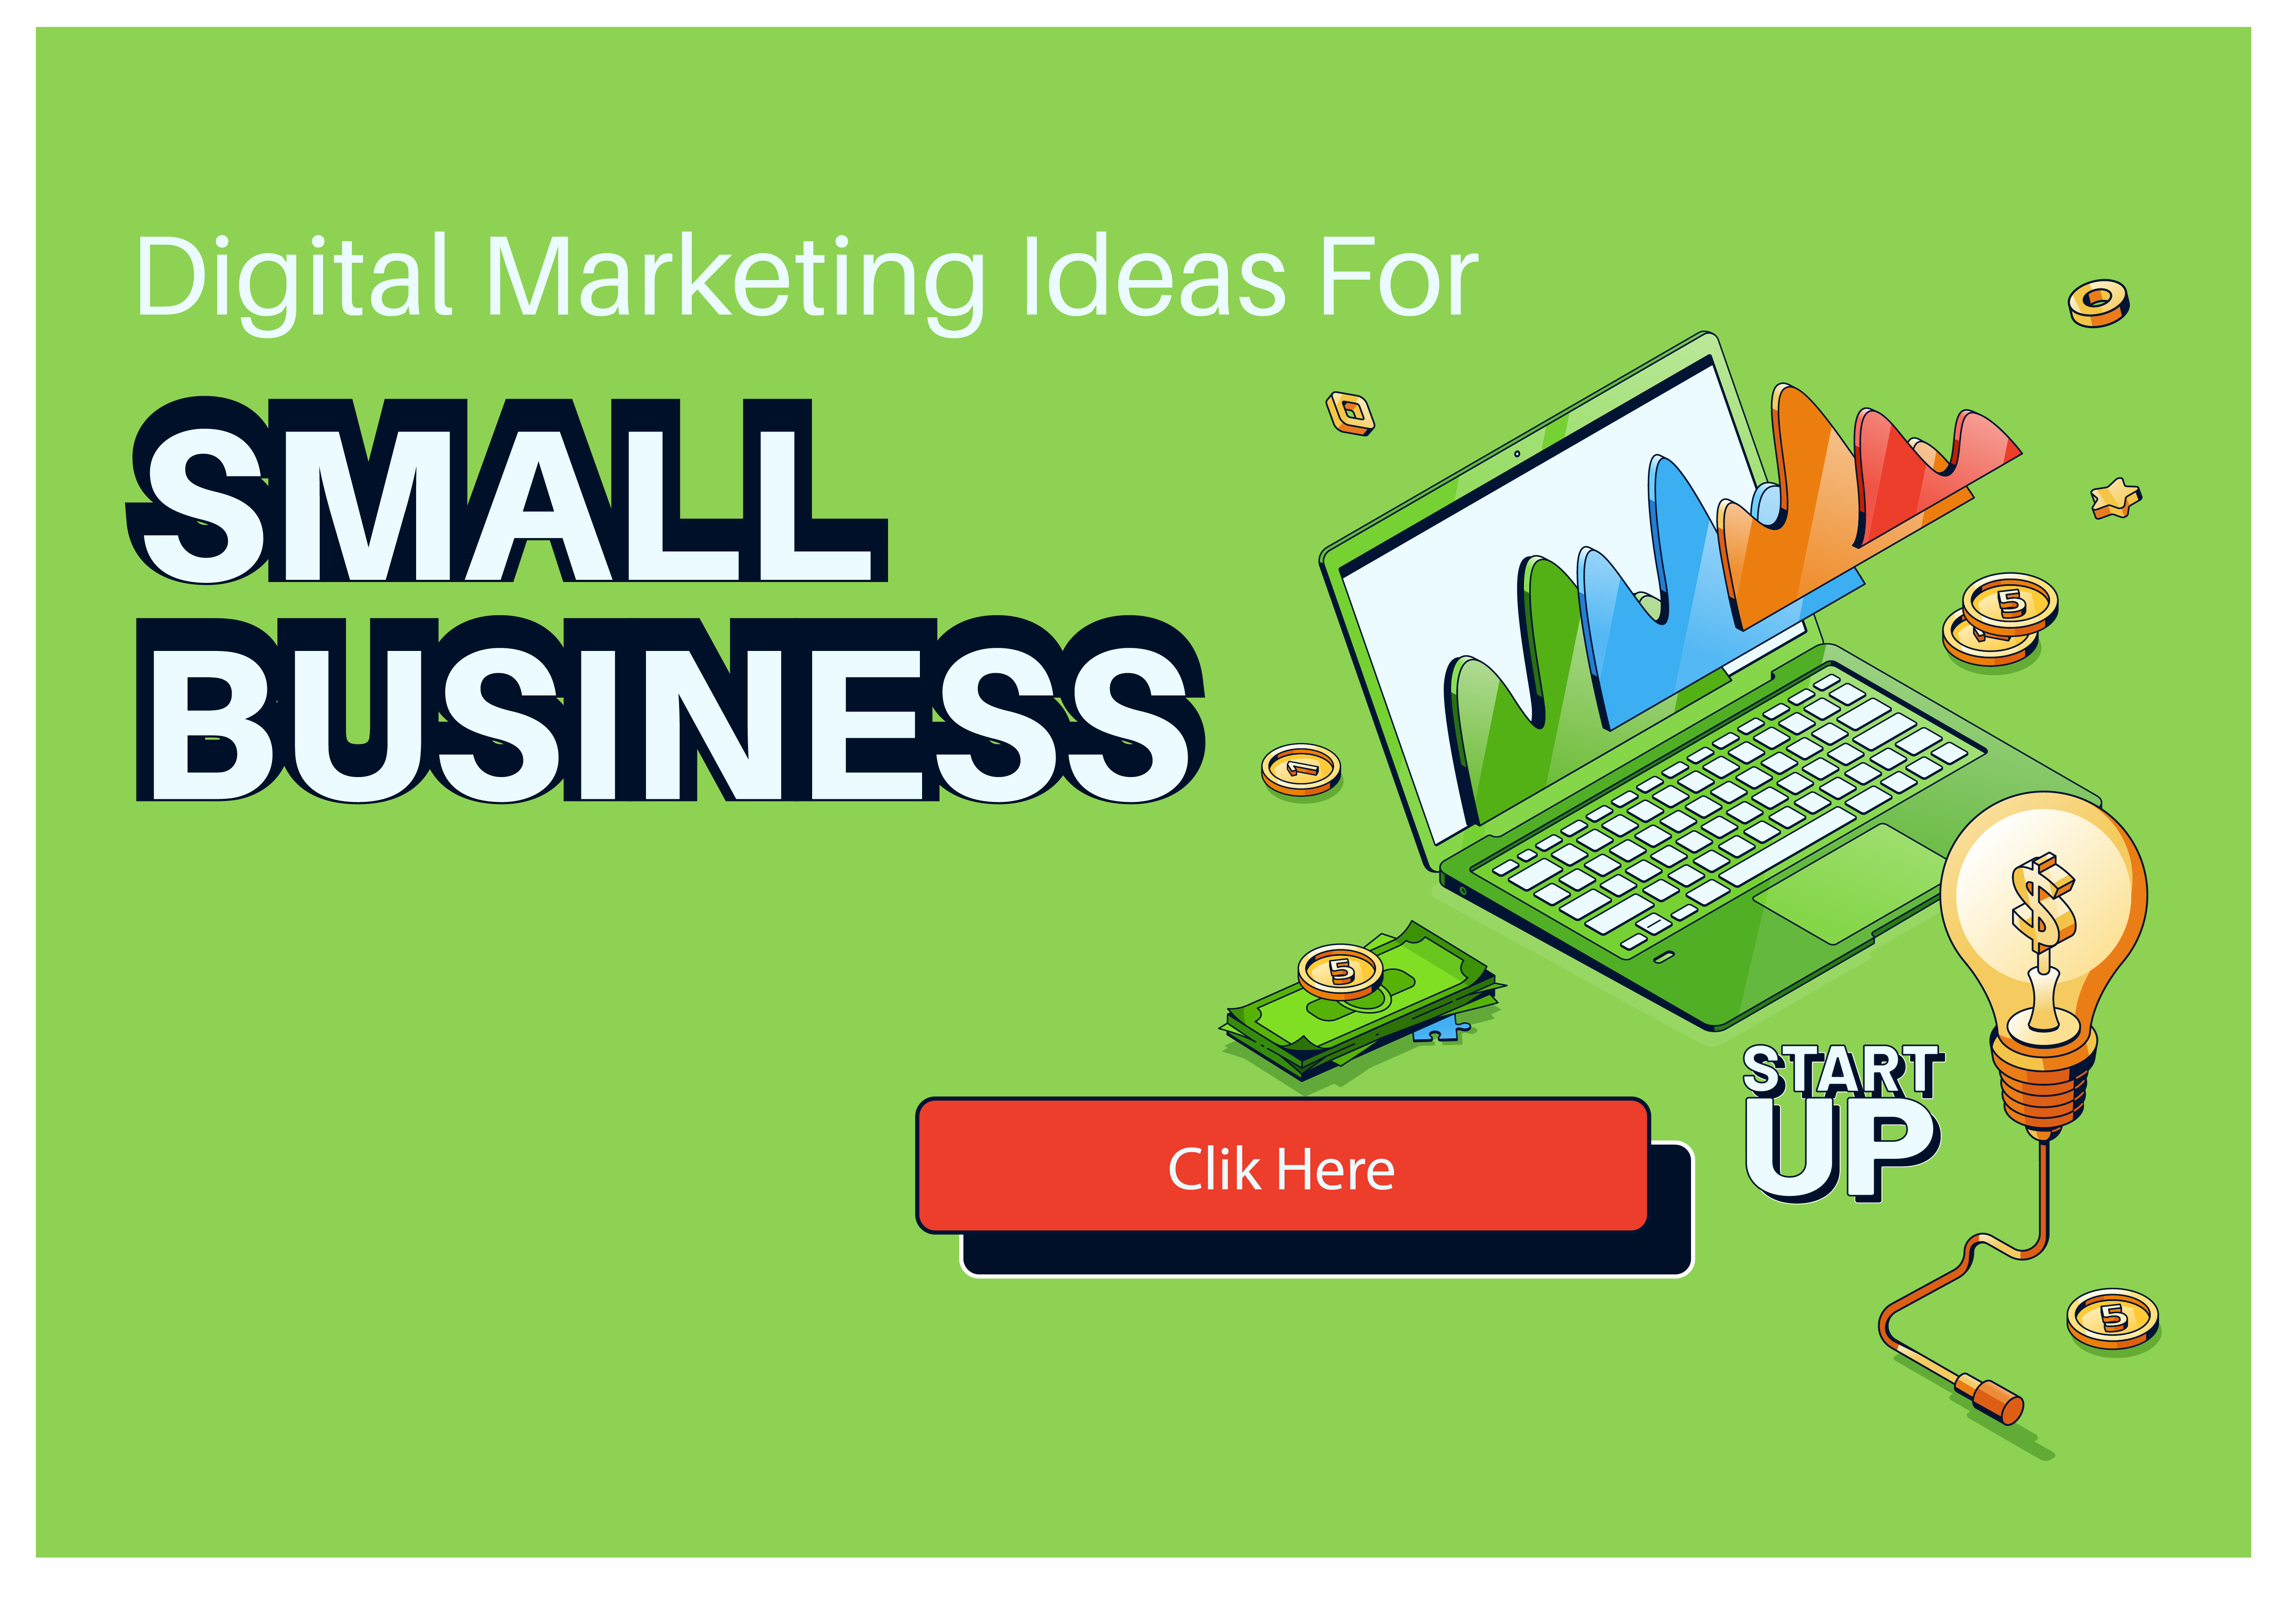 Digital marketing ideas for small business